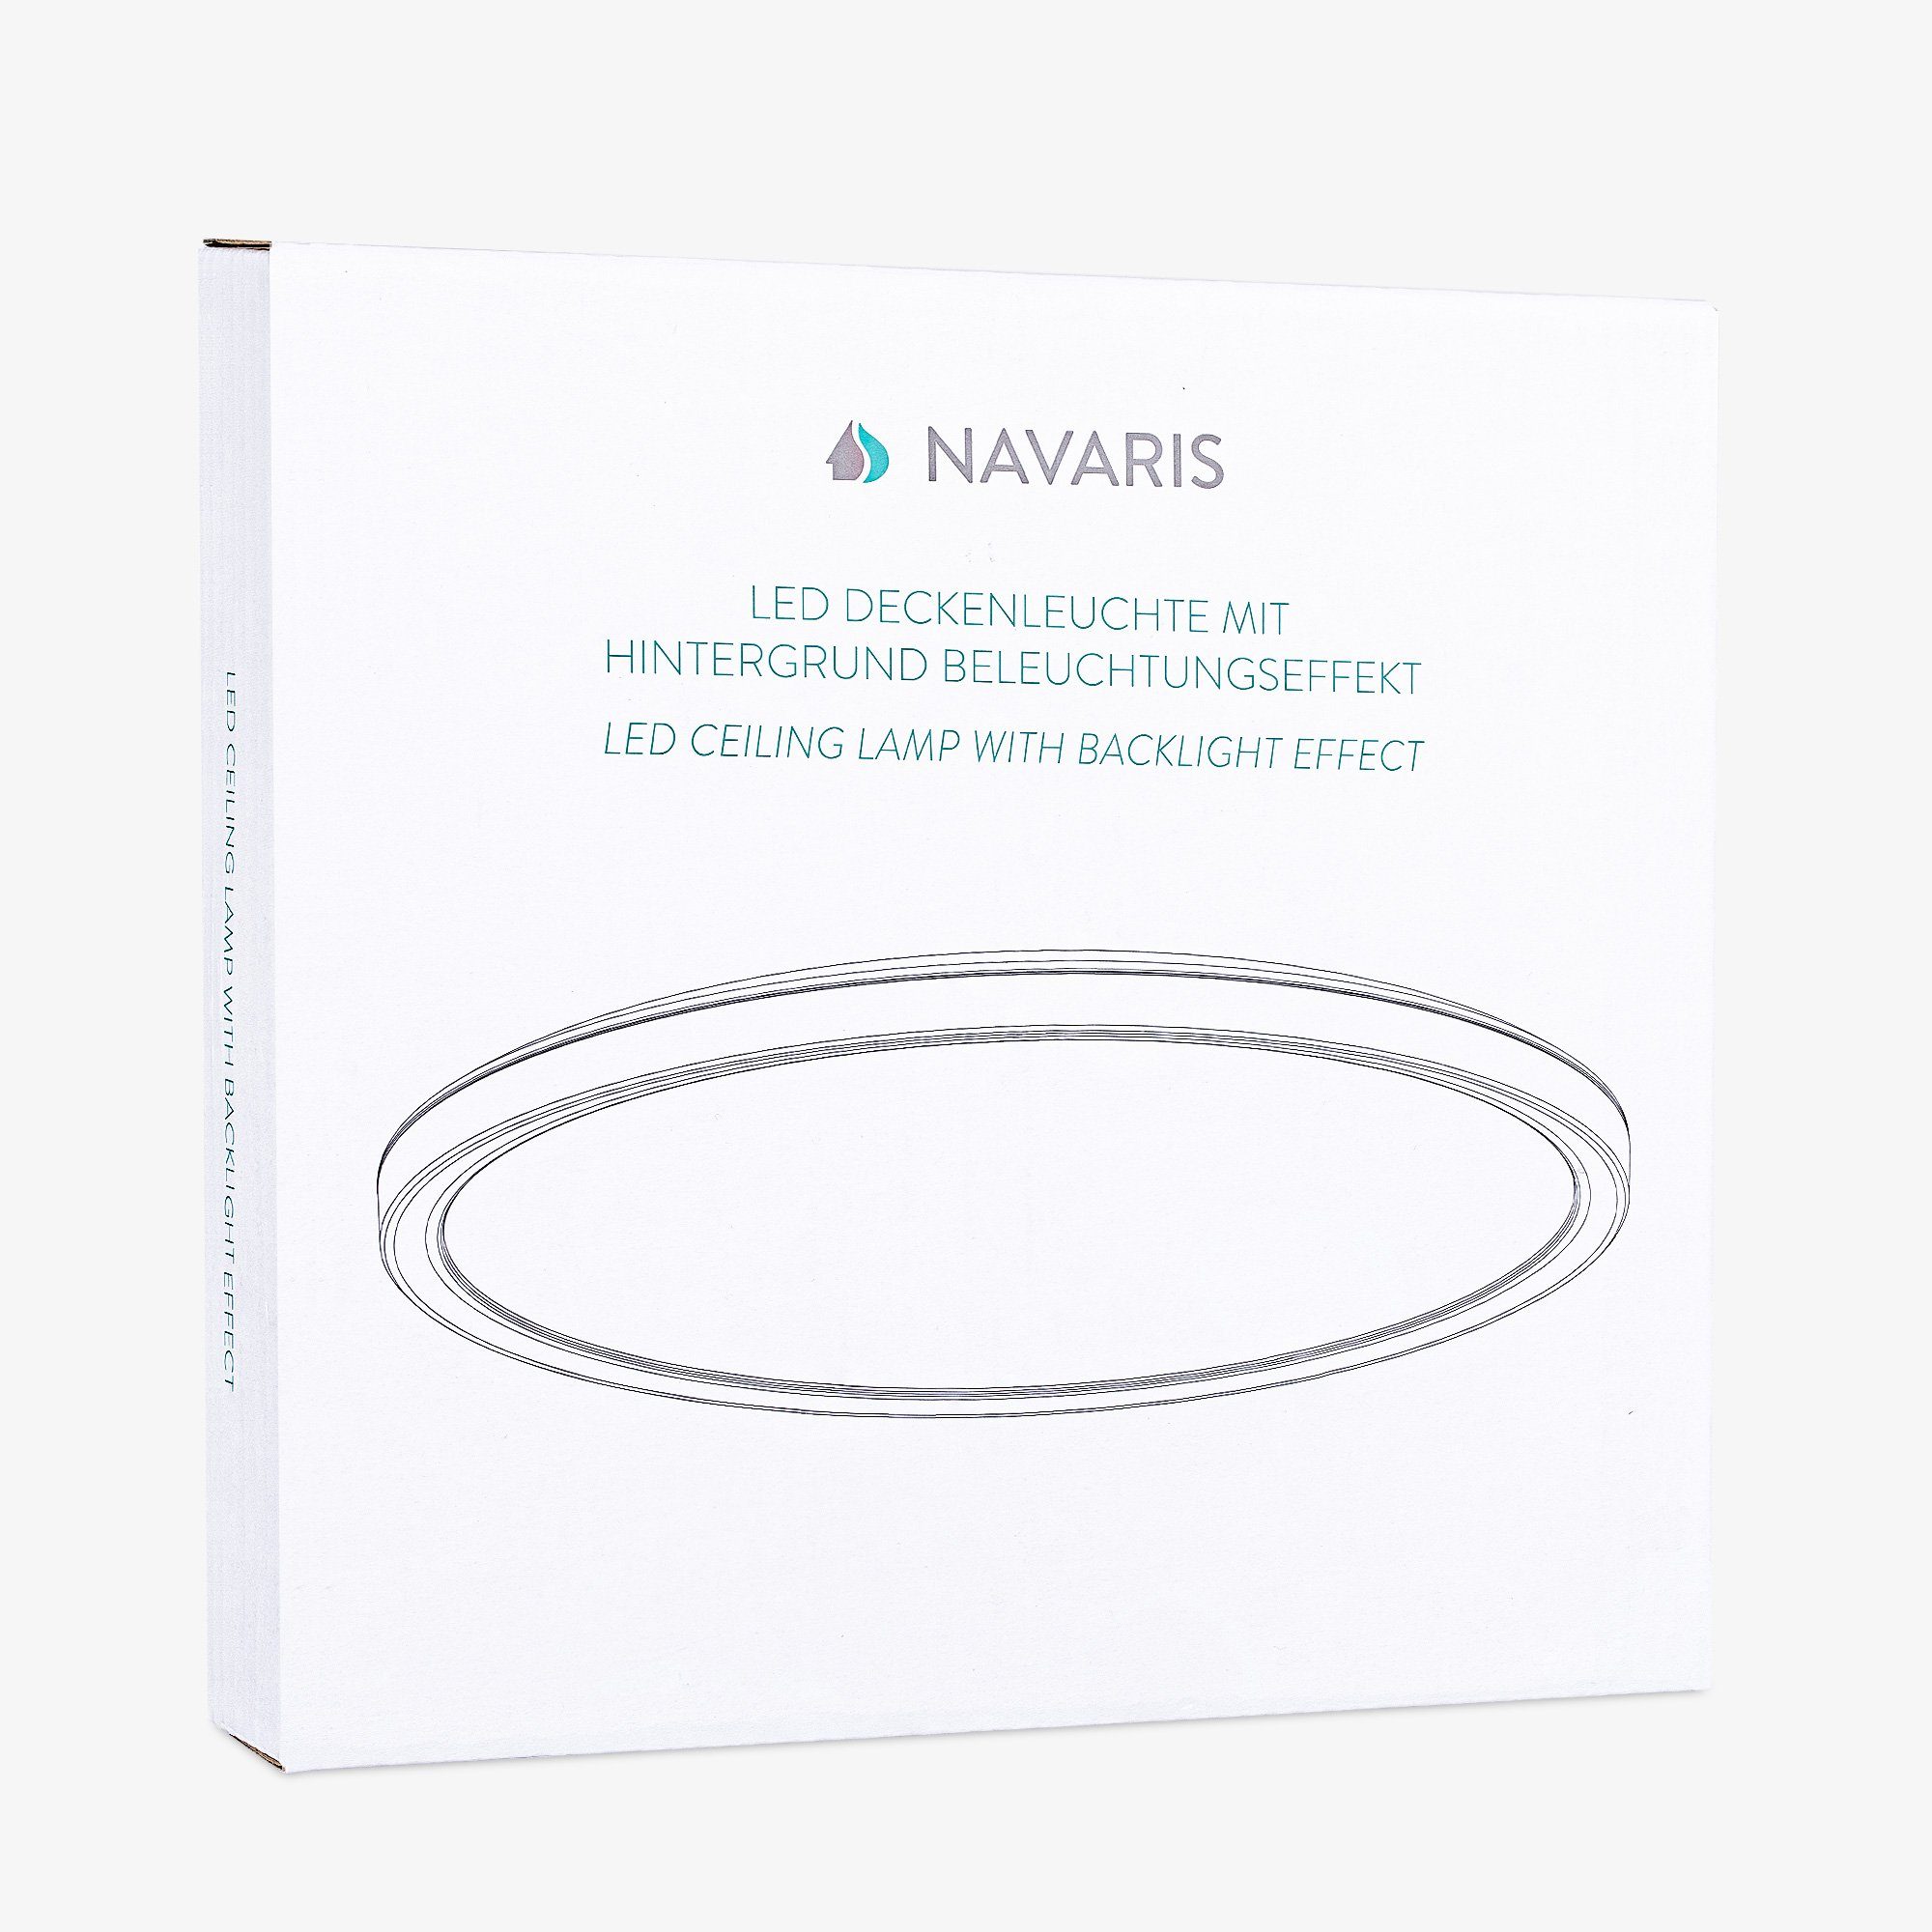 fest ultra integriert, Navaris - LED LED LED Deckenleuchte, flach Deckenlampe - Watt 8 Hintergrundbeleuchtung mit